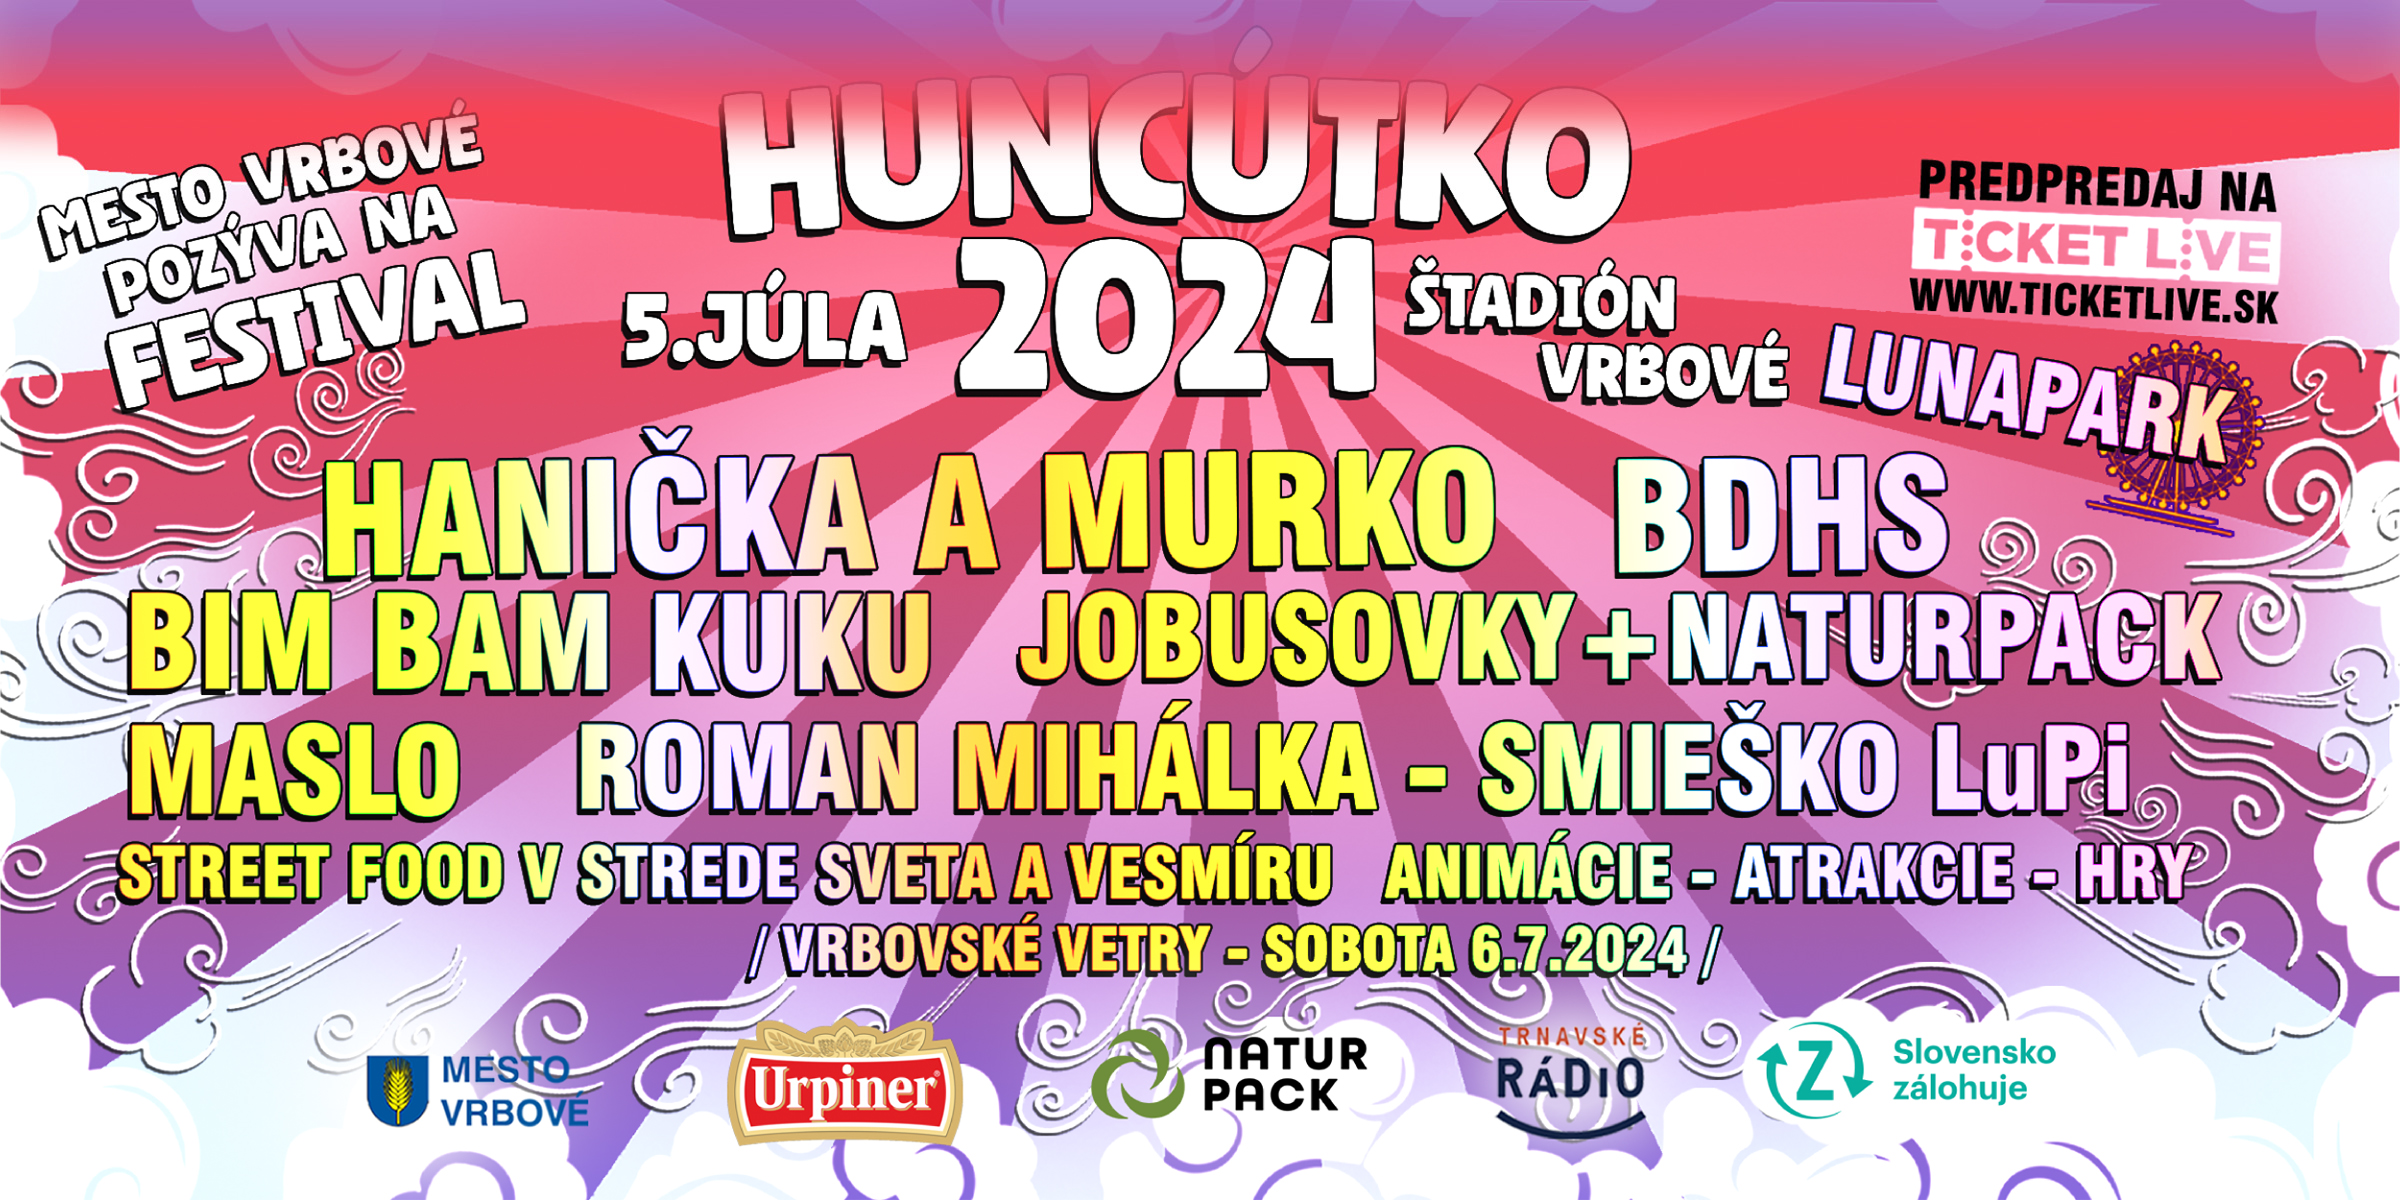 huncutko1-2024-2